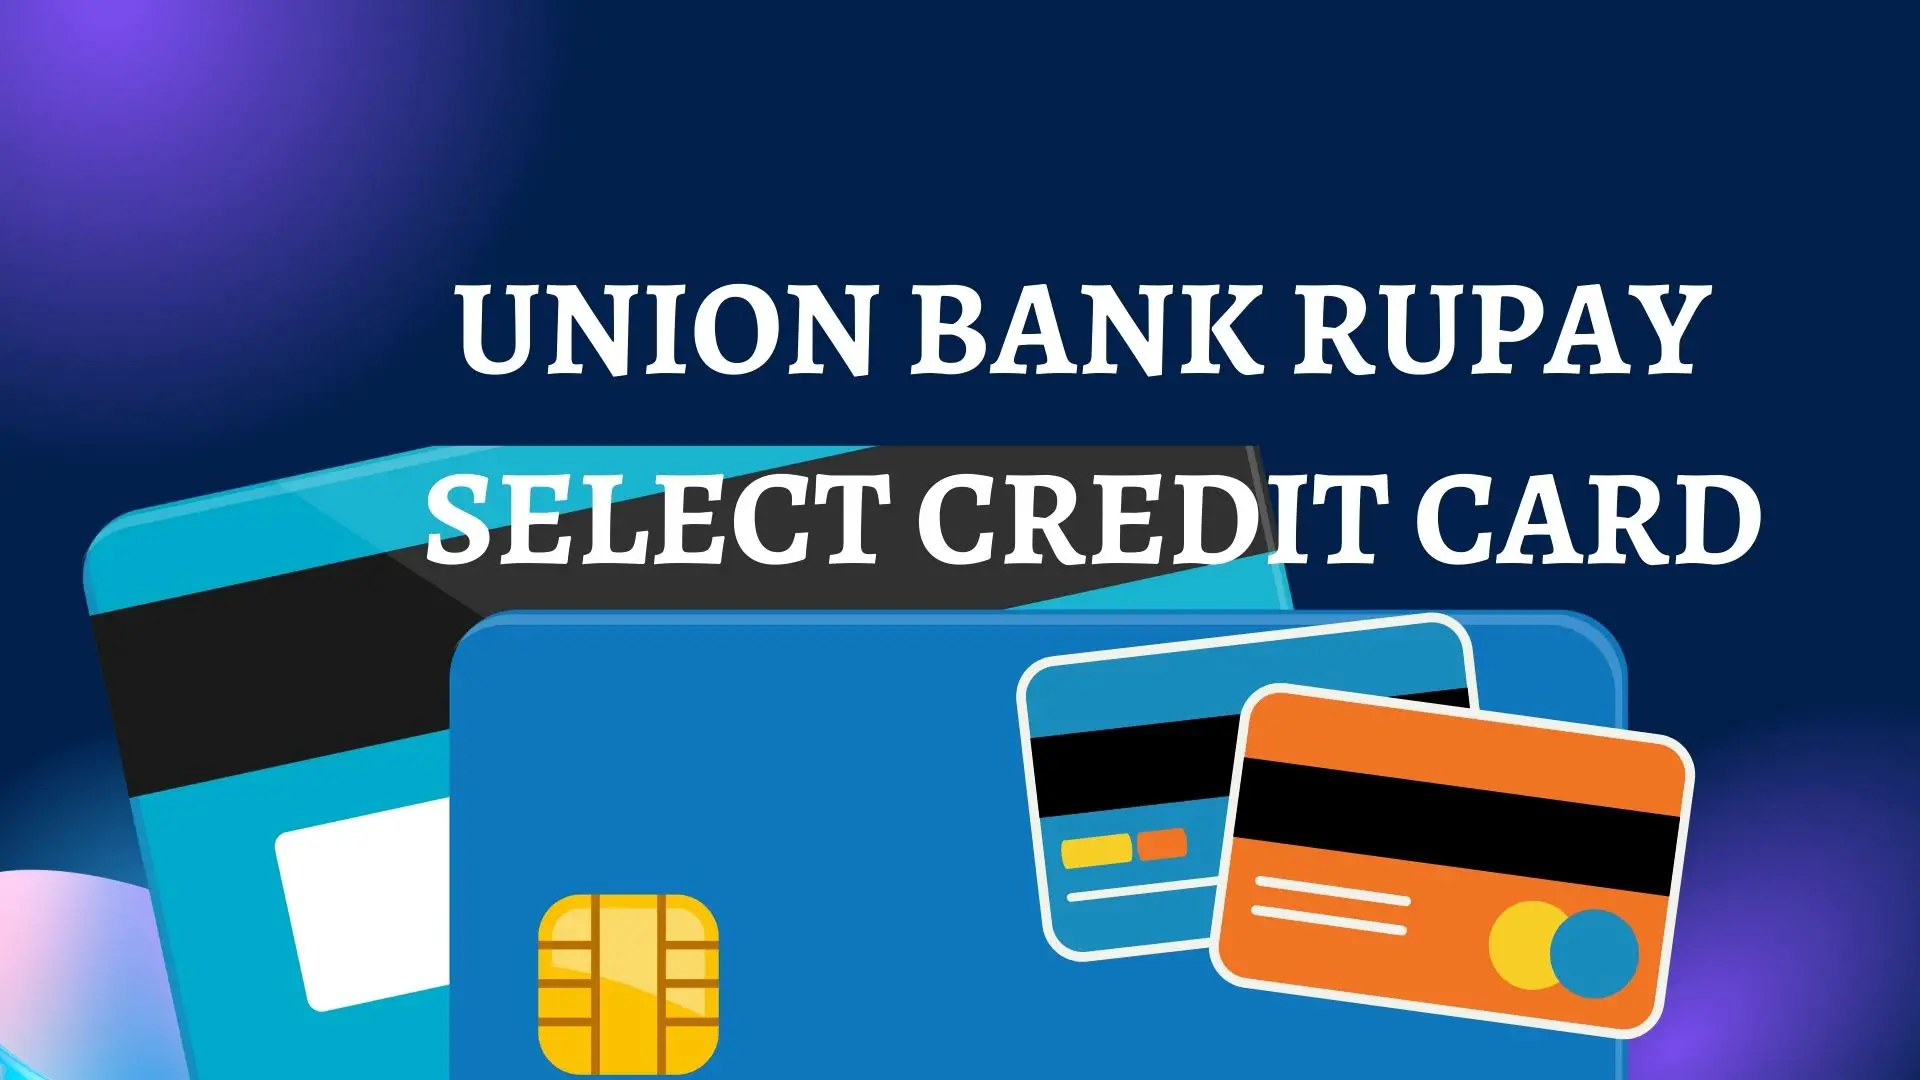 UNION BANK RUPAY SELECT CREDIT CARD